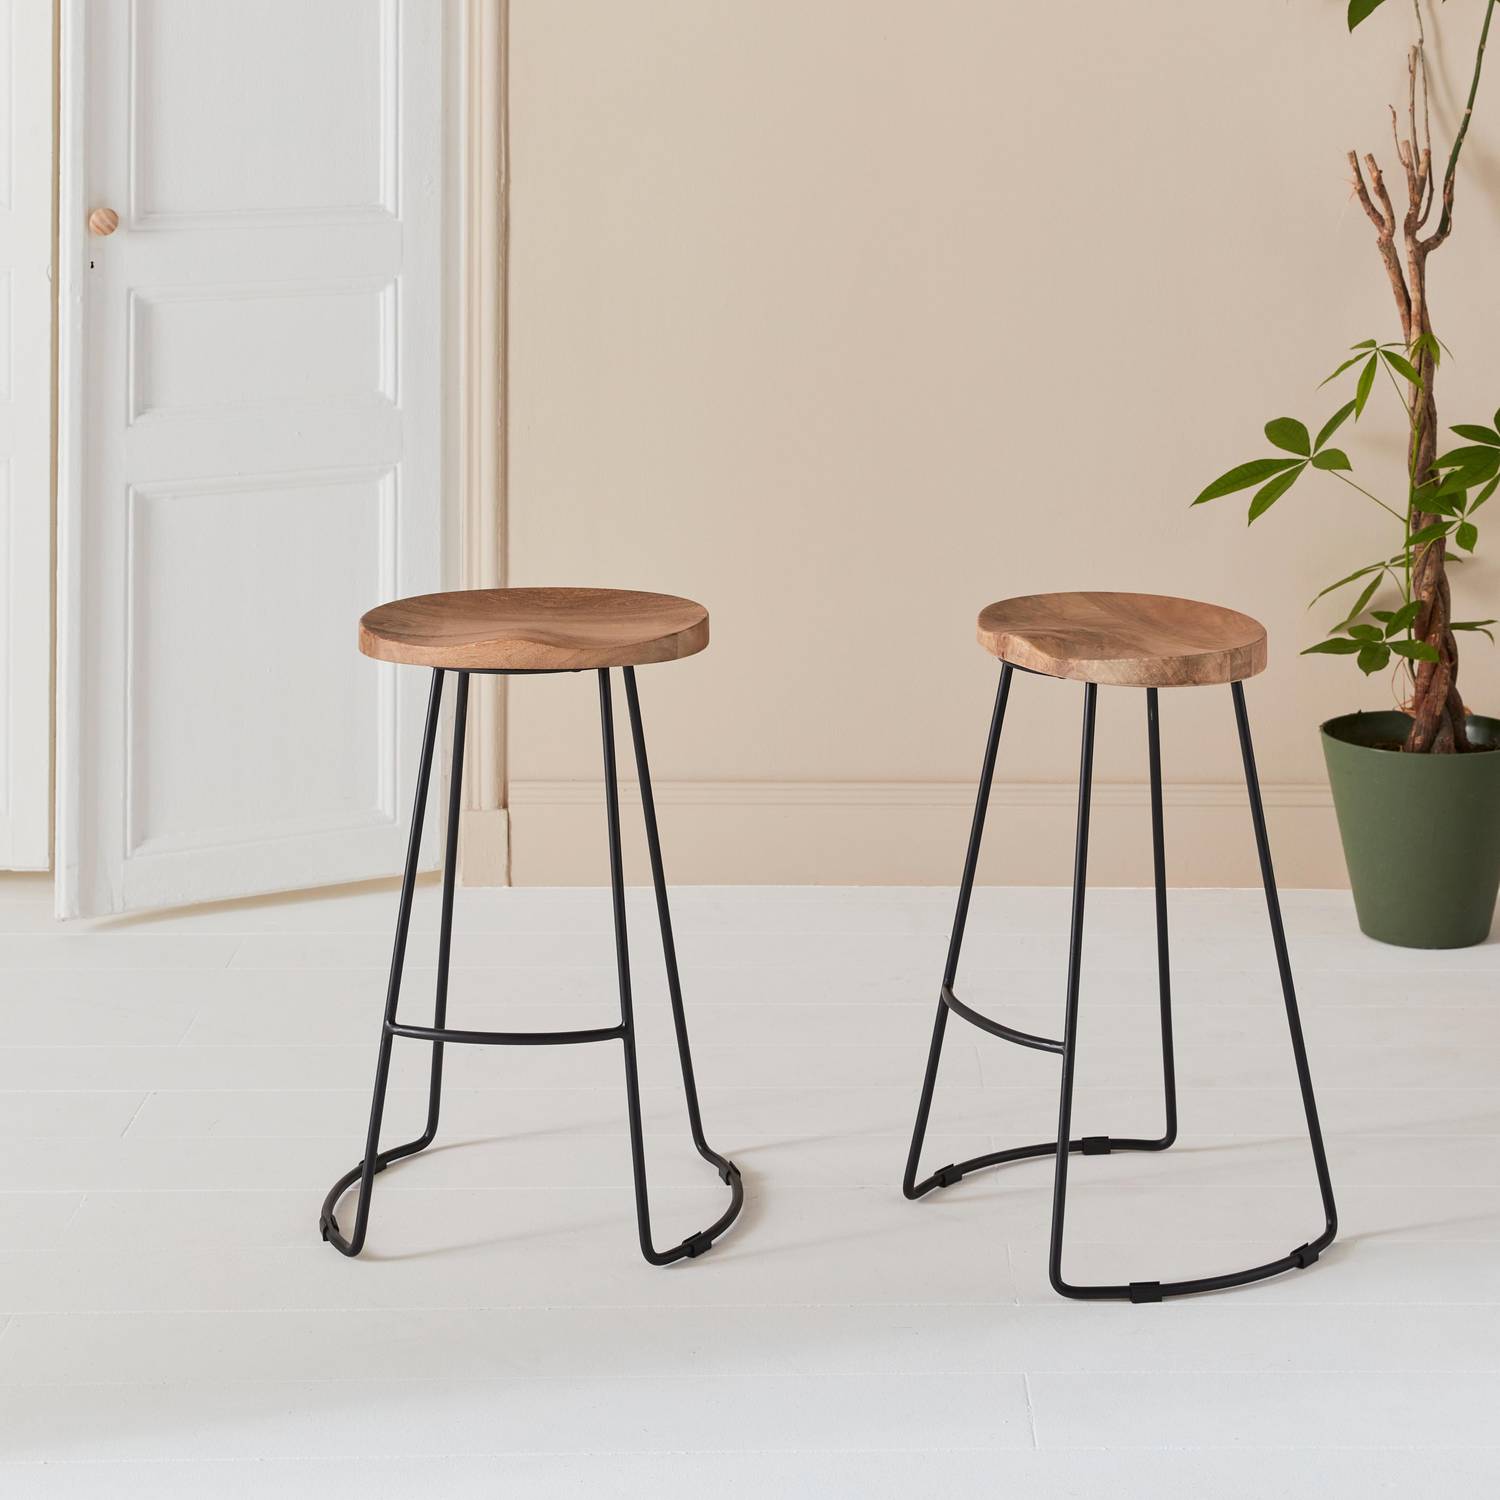 Pair of industrial metal and wooden bar stools, 44x36x65cm, Jaya, Natural, Mango wood seat, black metal legs Photo1